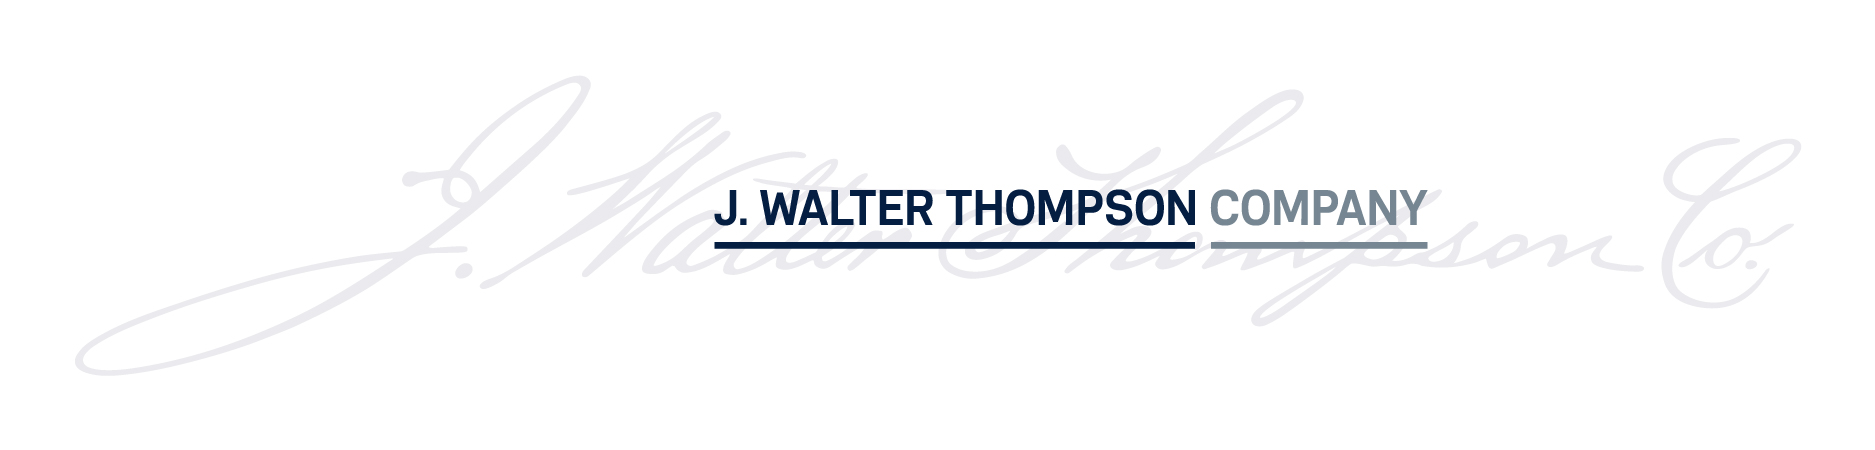 J_Walter_Thompson_JWT_LogoSig_Company_RGB.jpg